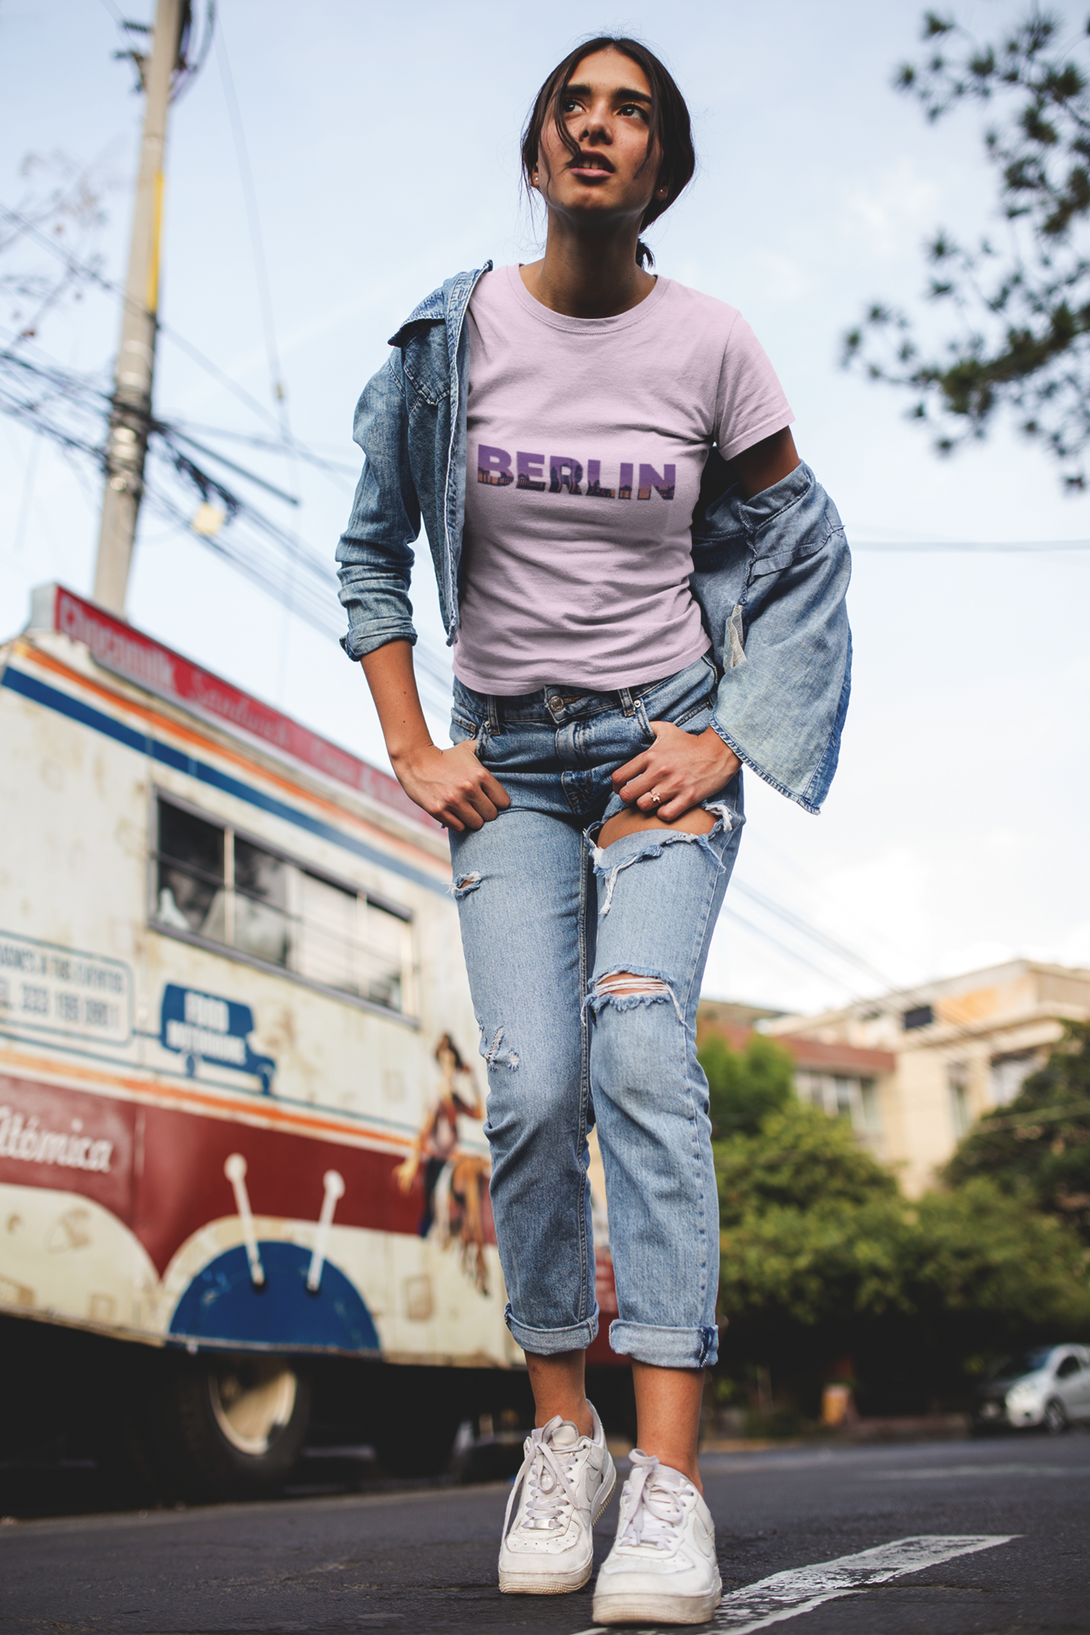 Berlin Skyline Printed T-Shirt For Women - WowWaves - 4